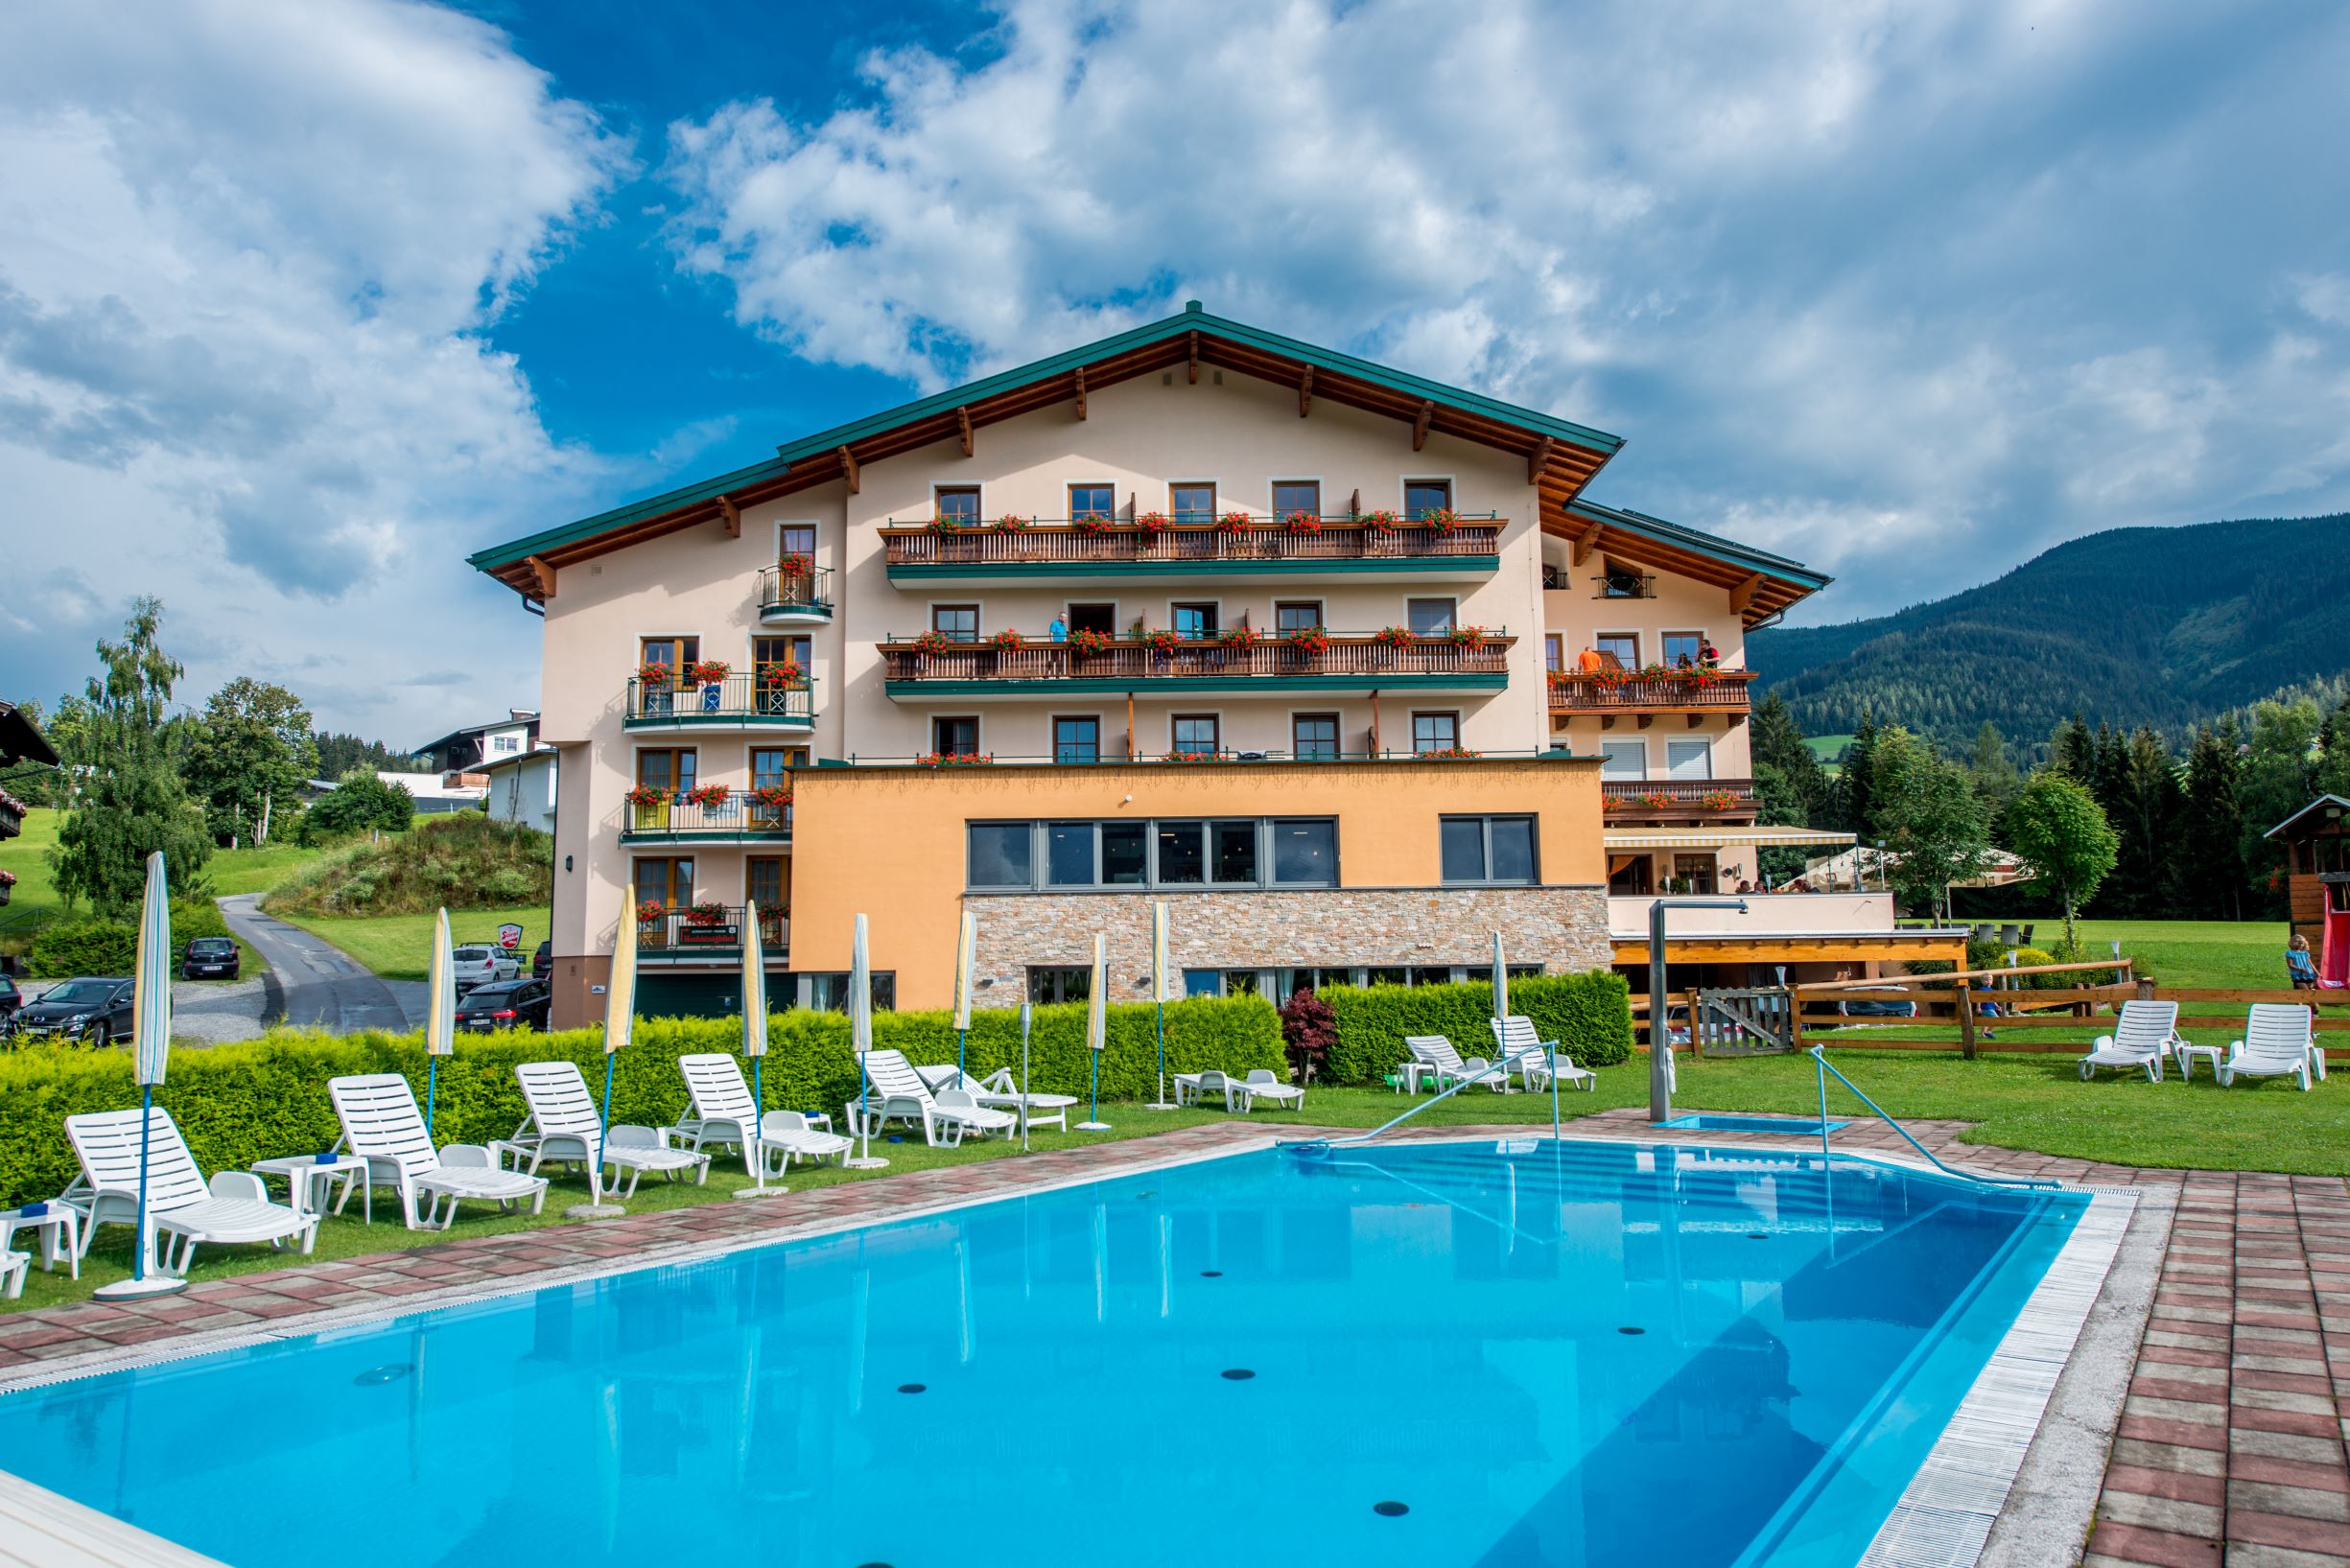 Hoteleigener Pool im Alpengasthof Hochkönigblick